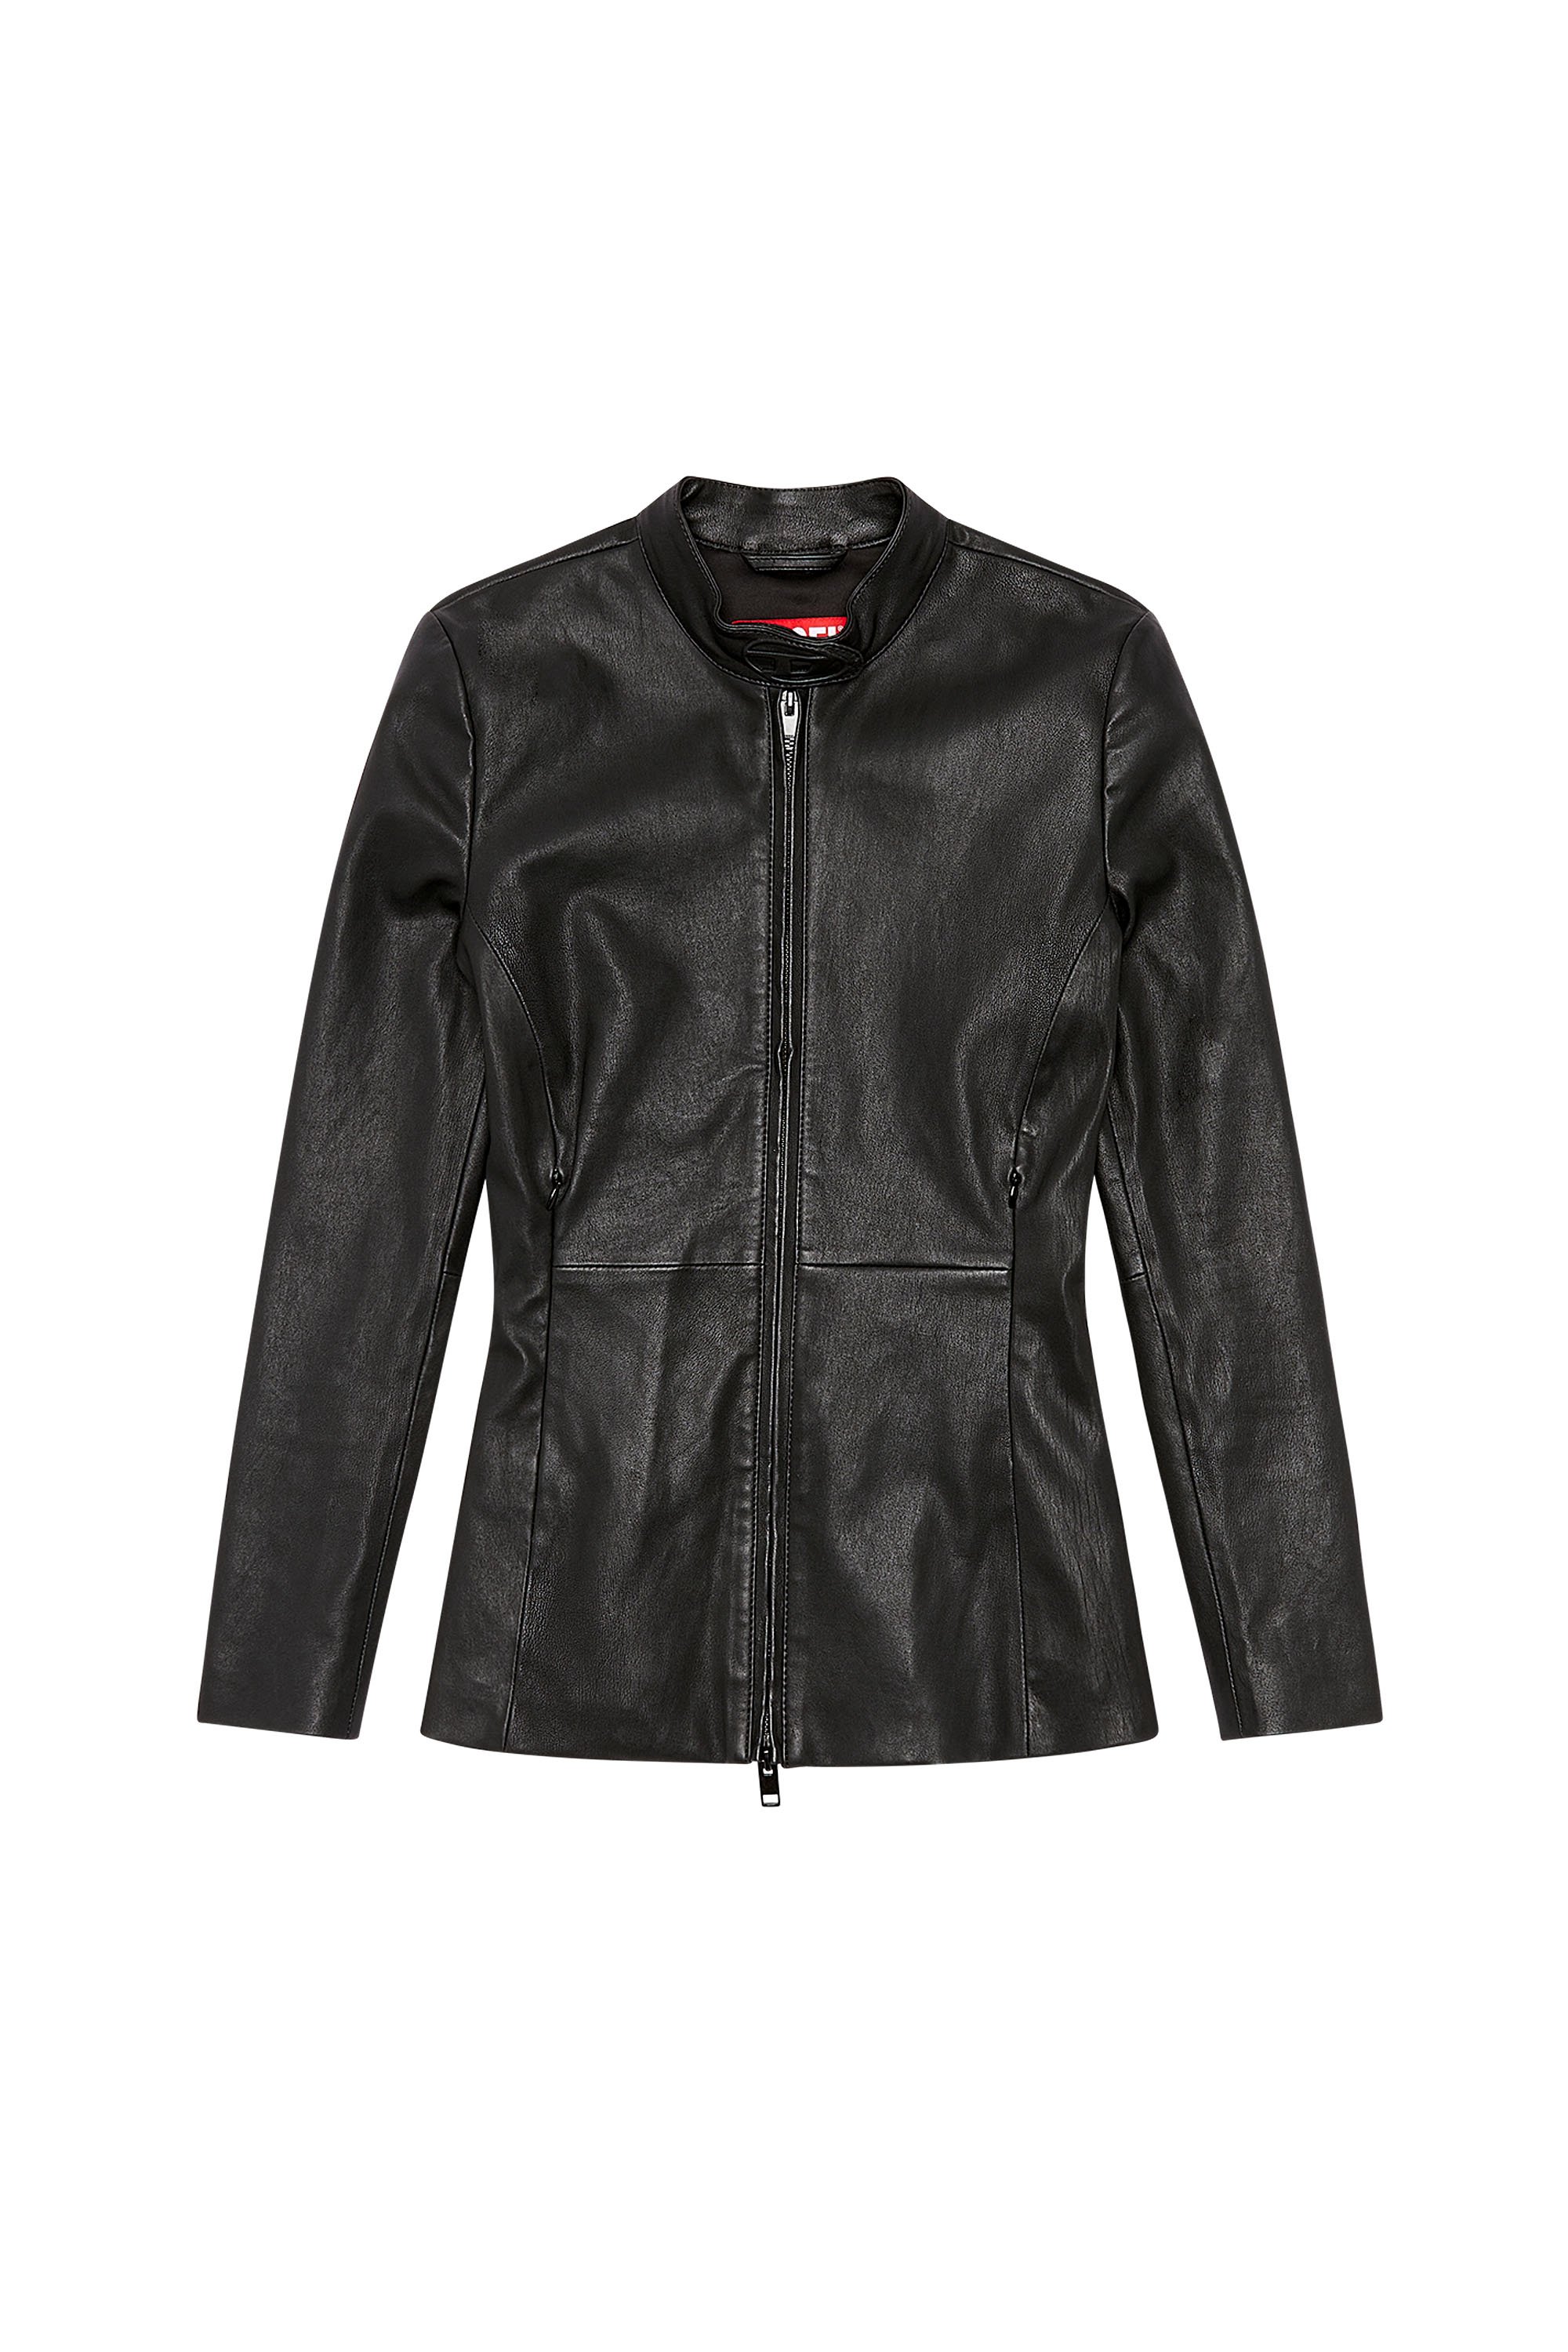 Diesel - L-SORY-N1, Woman Stretch-leather jacket in Black - Image 3